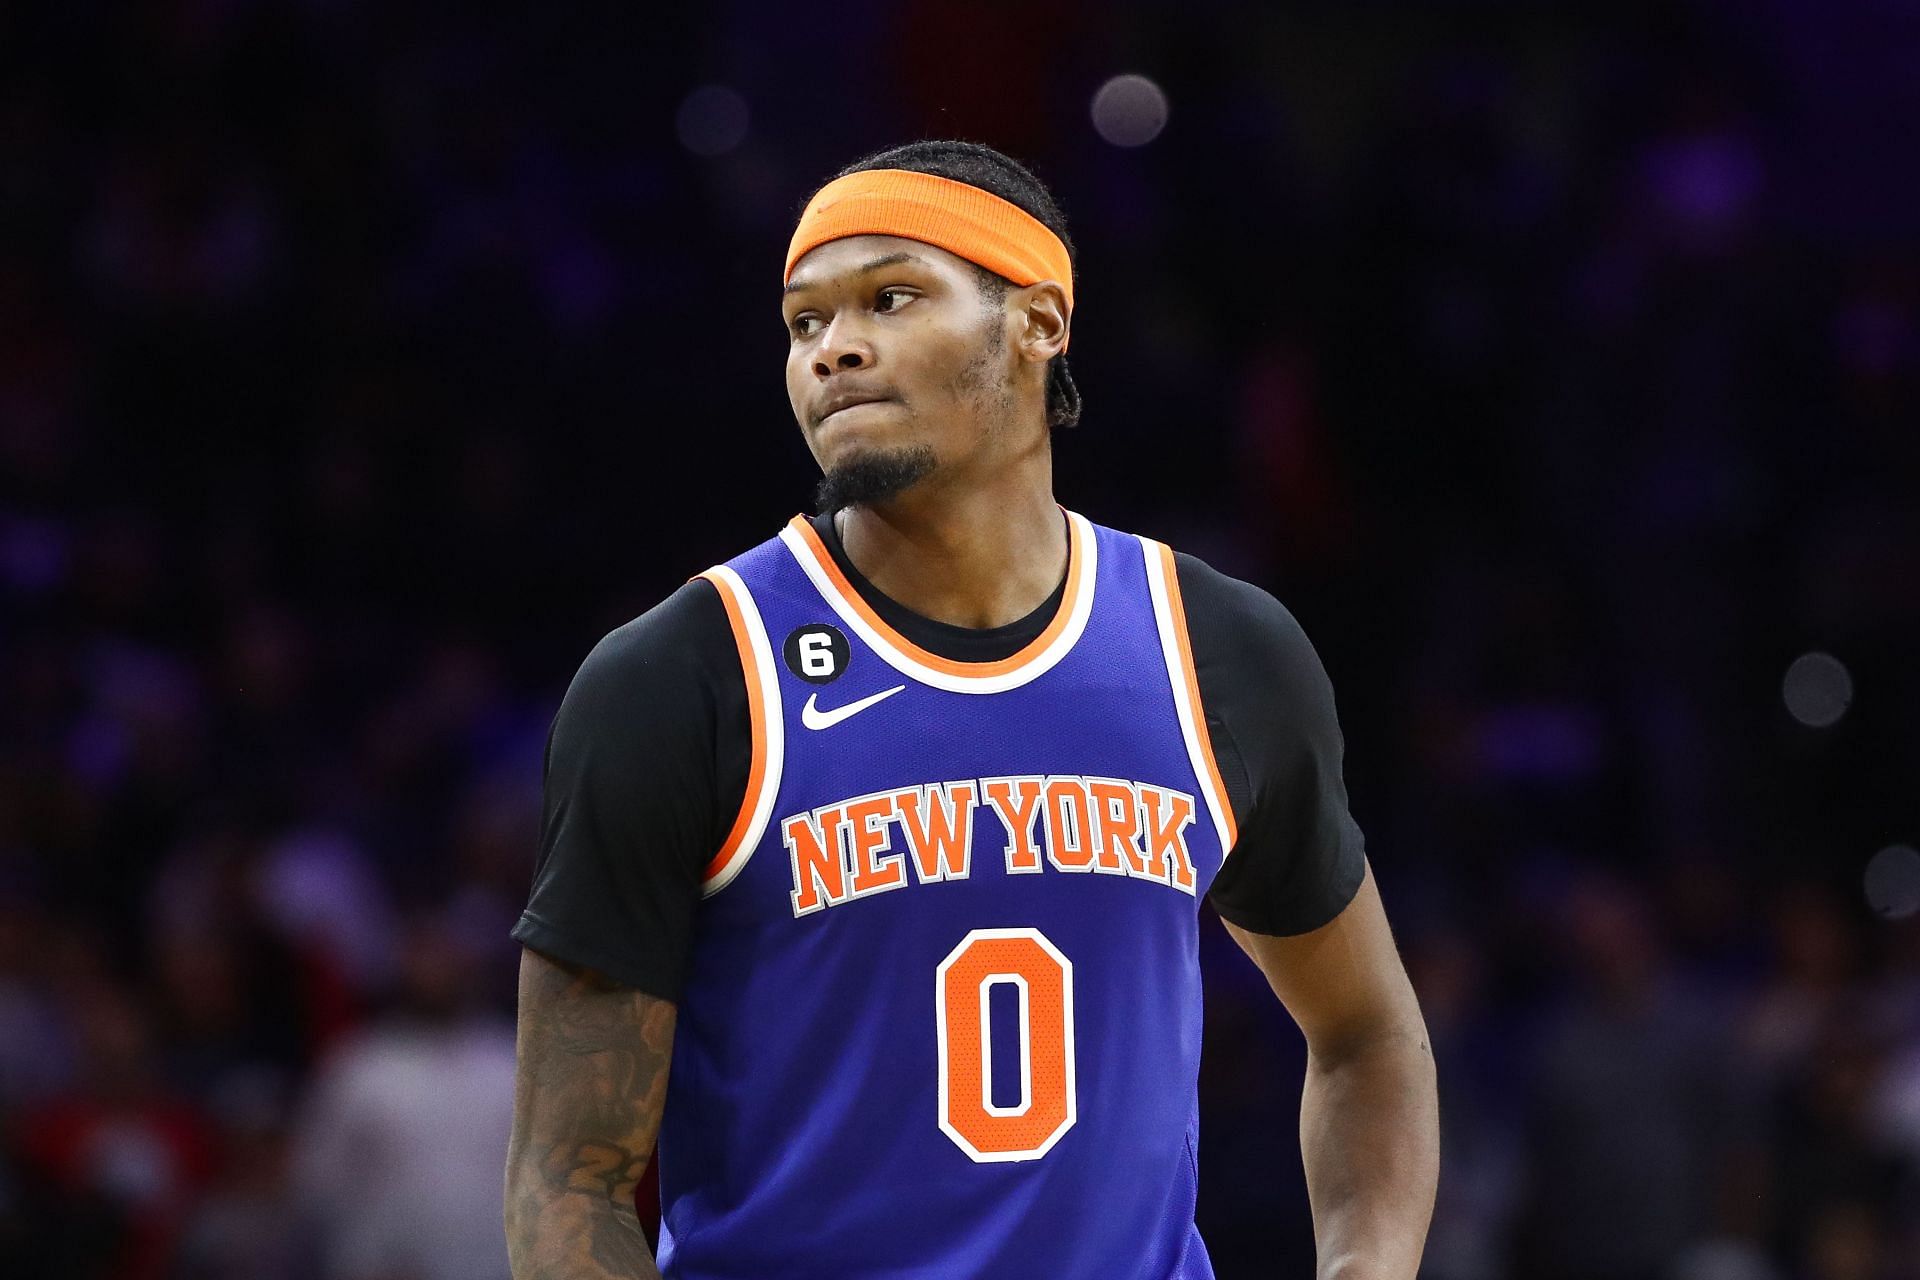 Cam Reddish of the New York Knicks